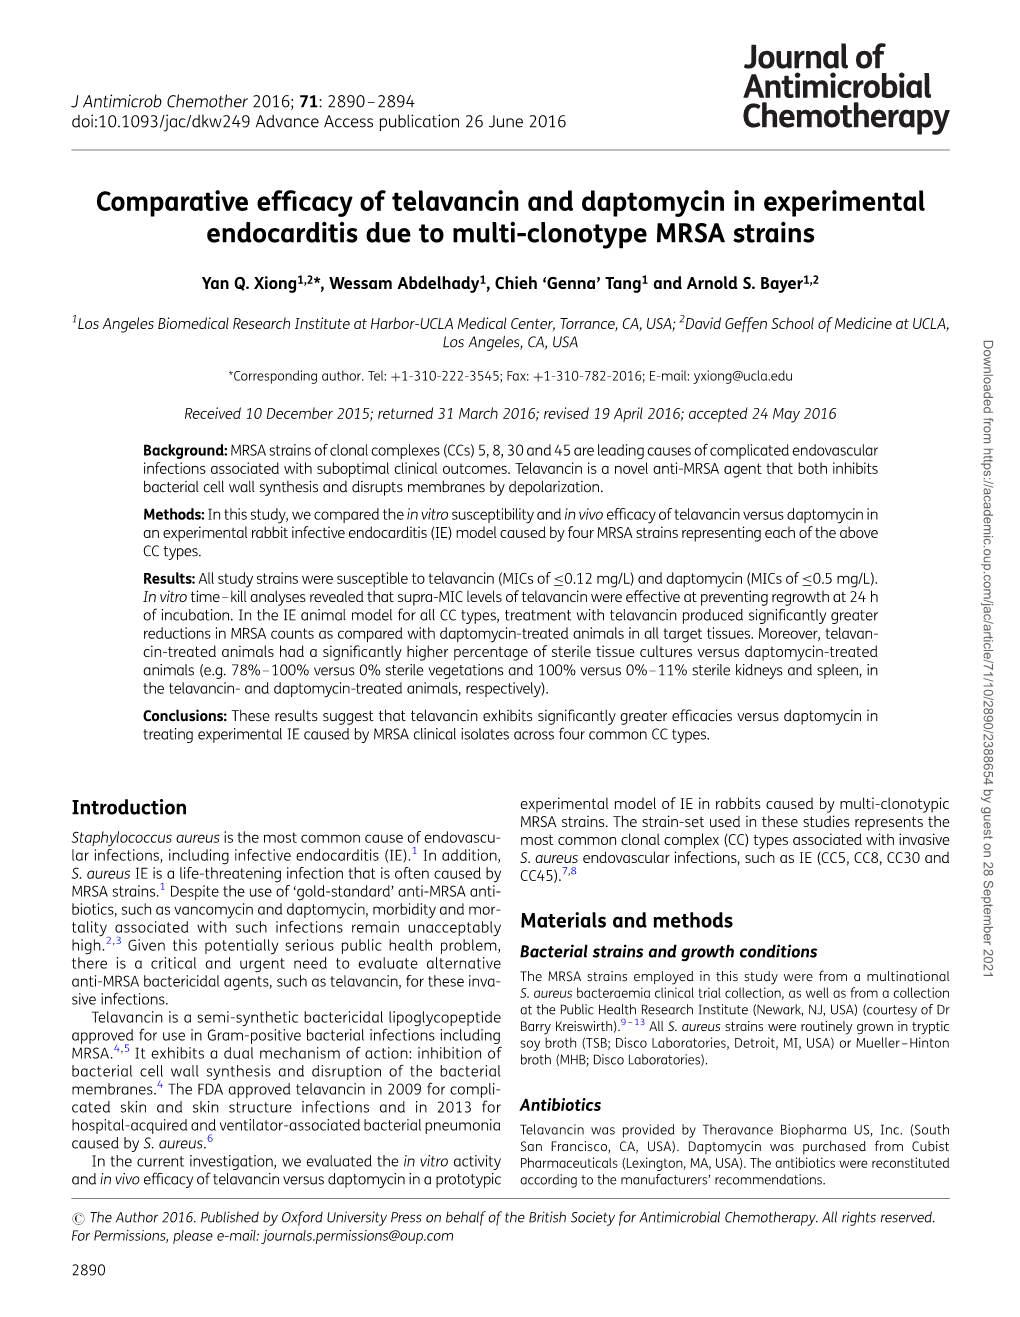 Comparative Efficacy of Telavancin and Daptomycin in Experimental